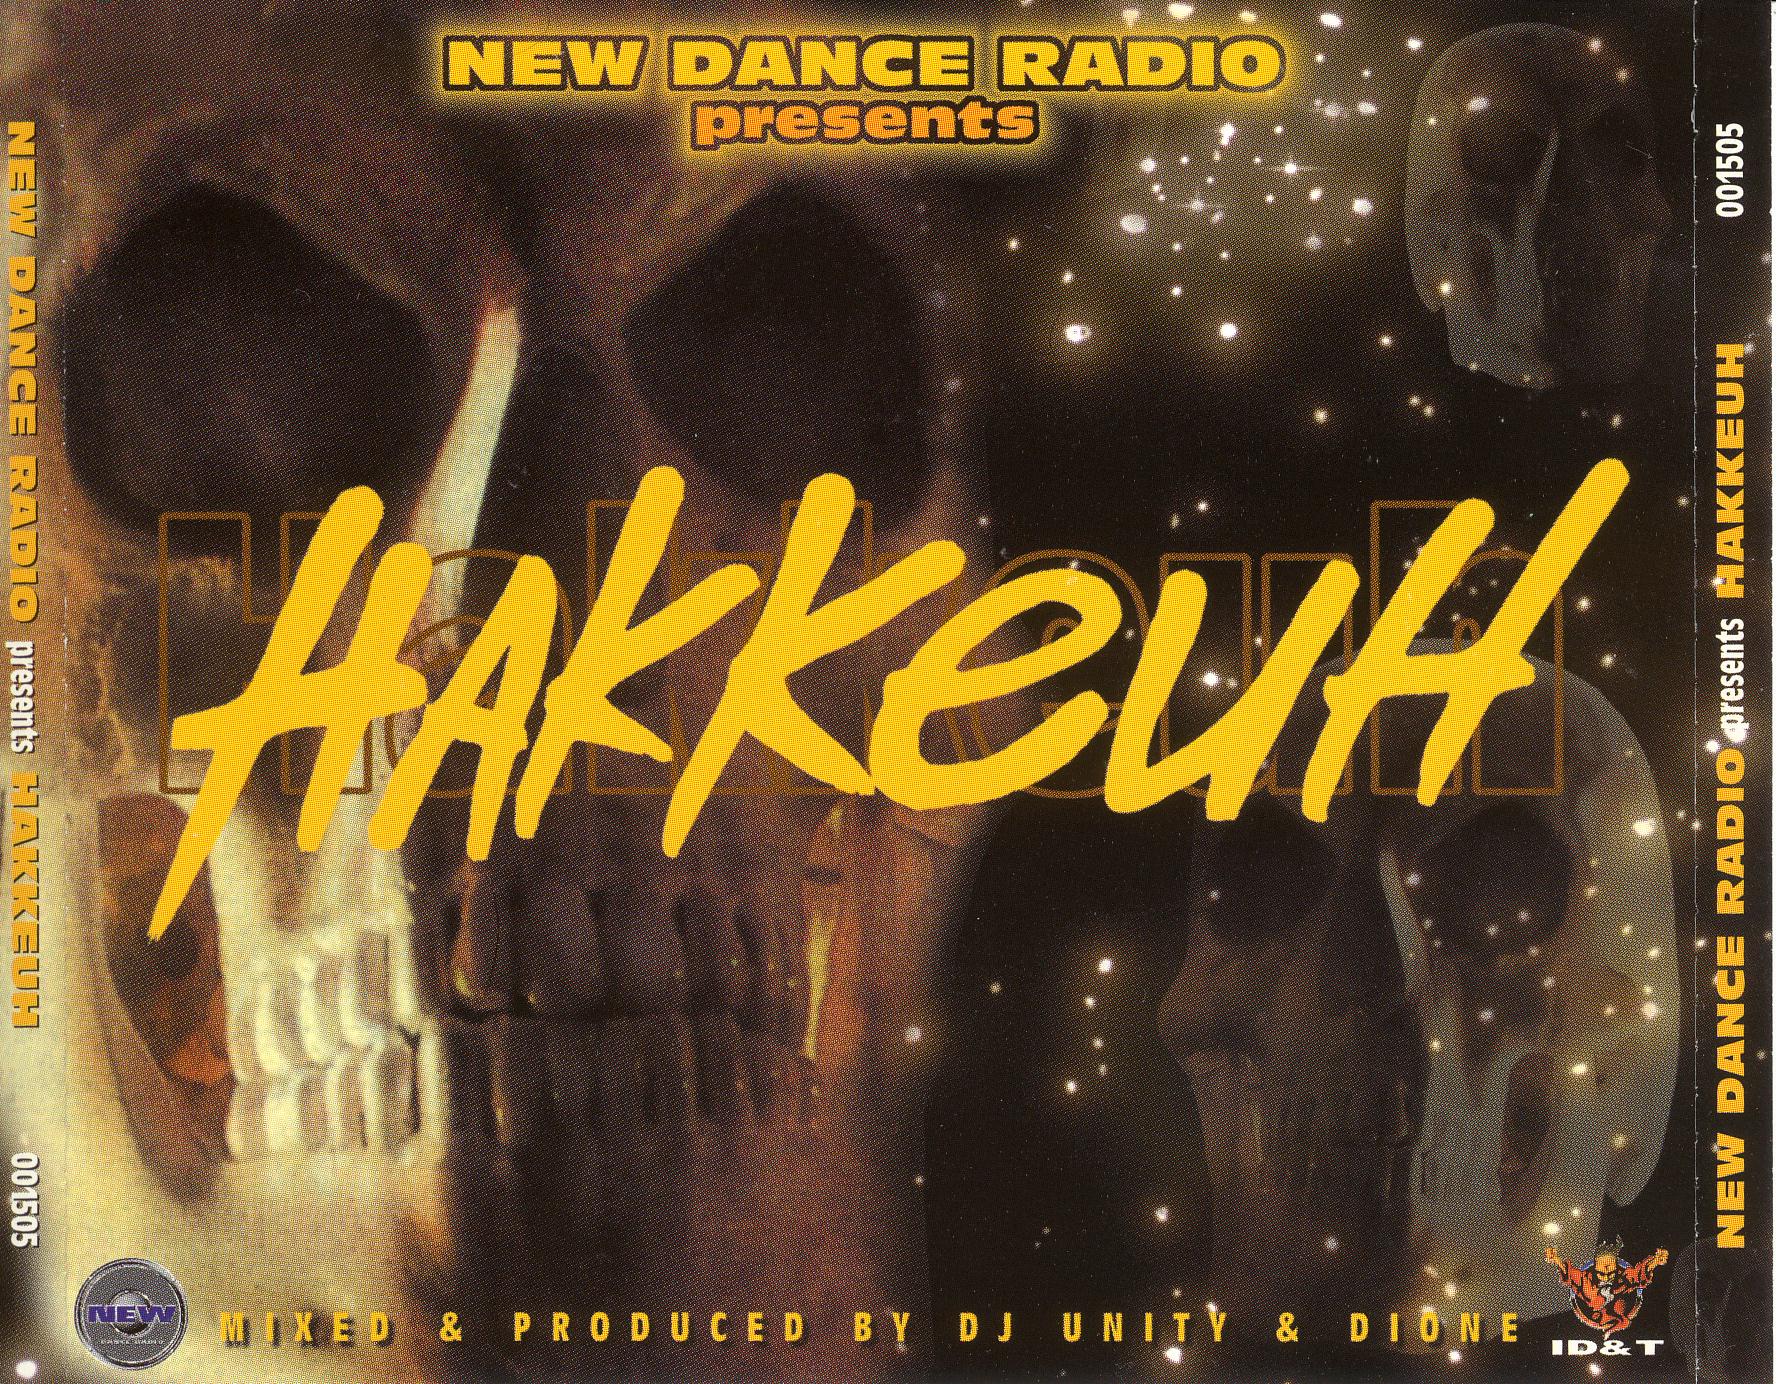 New Dance Radio Preesents - Hakkeuh 2CD (1996)